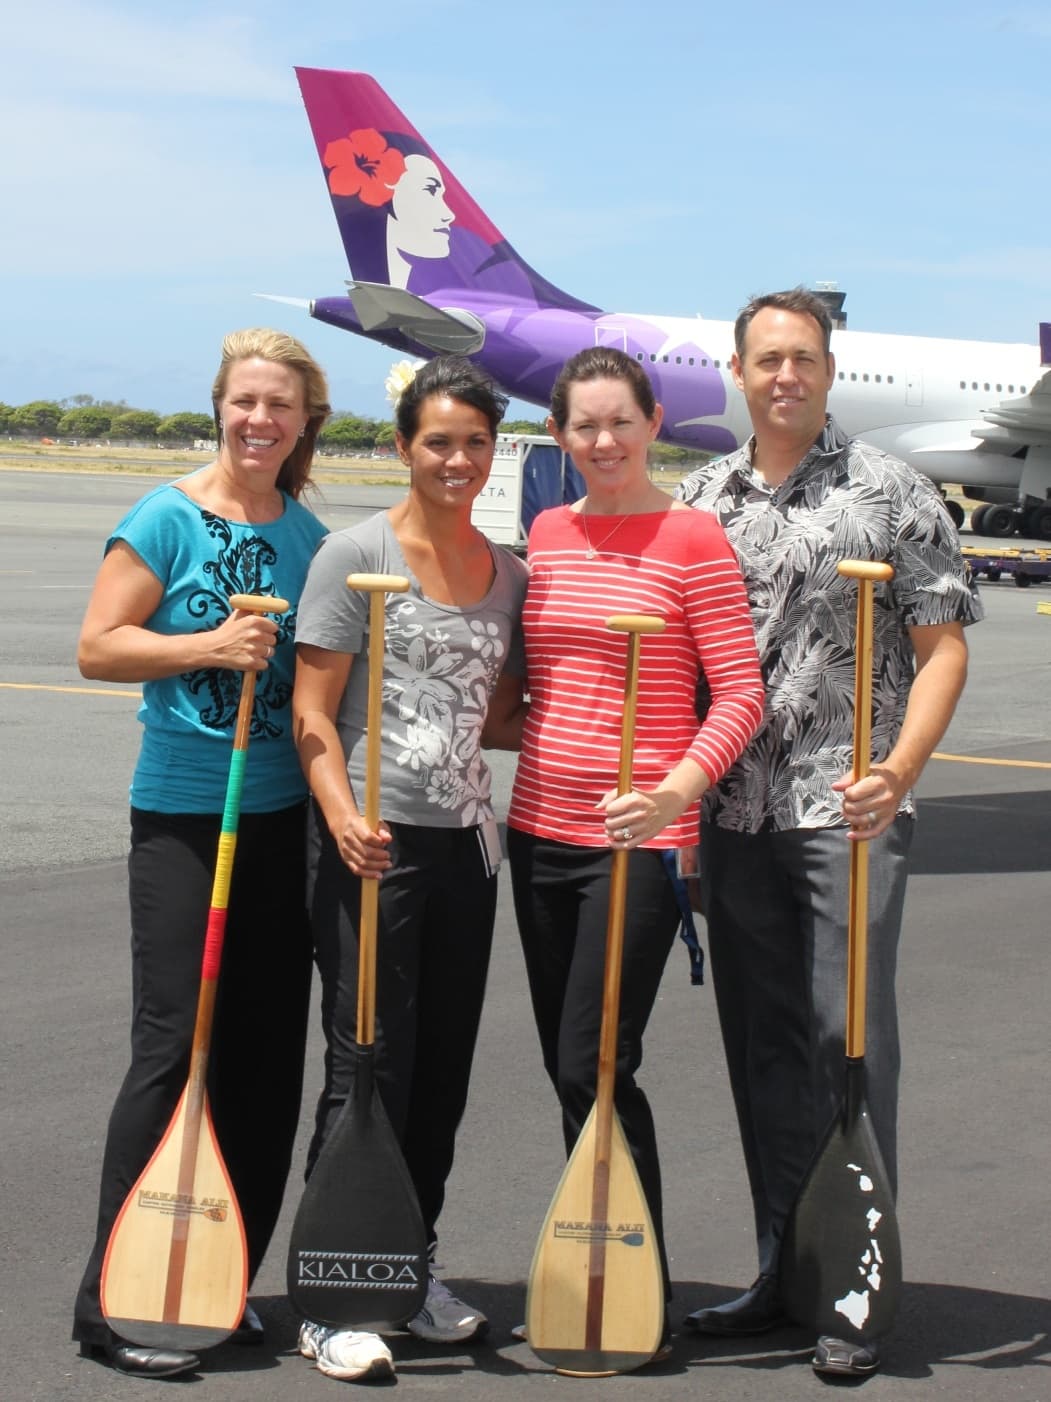 The Hawaiian Airlines team